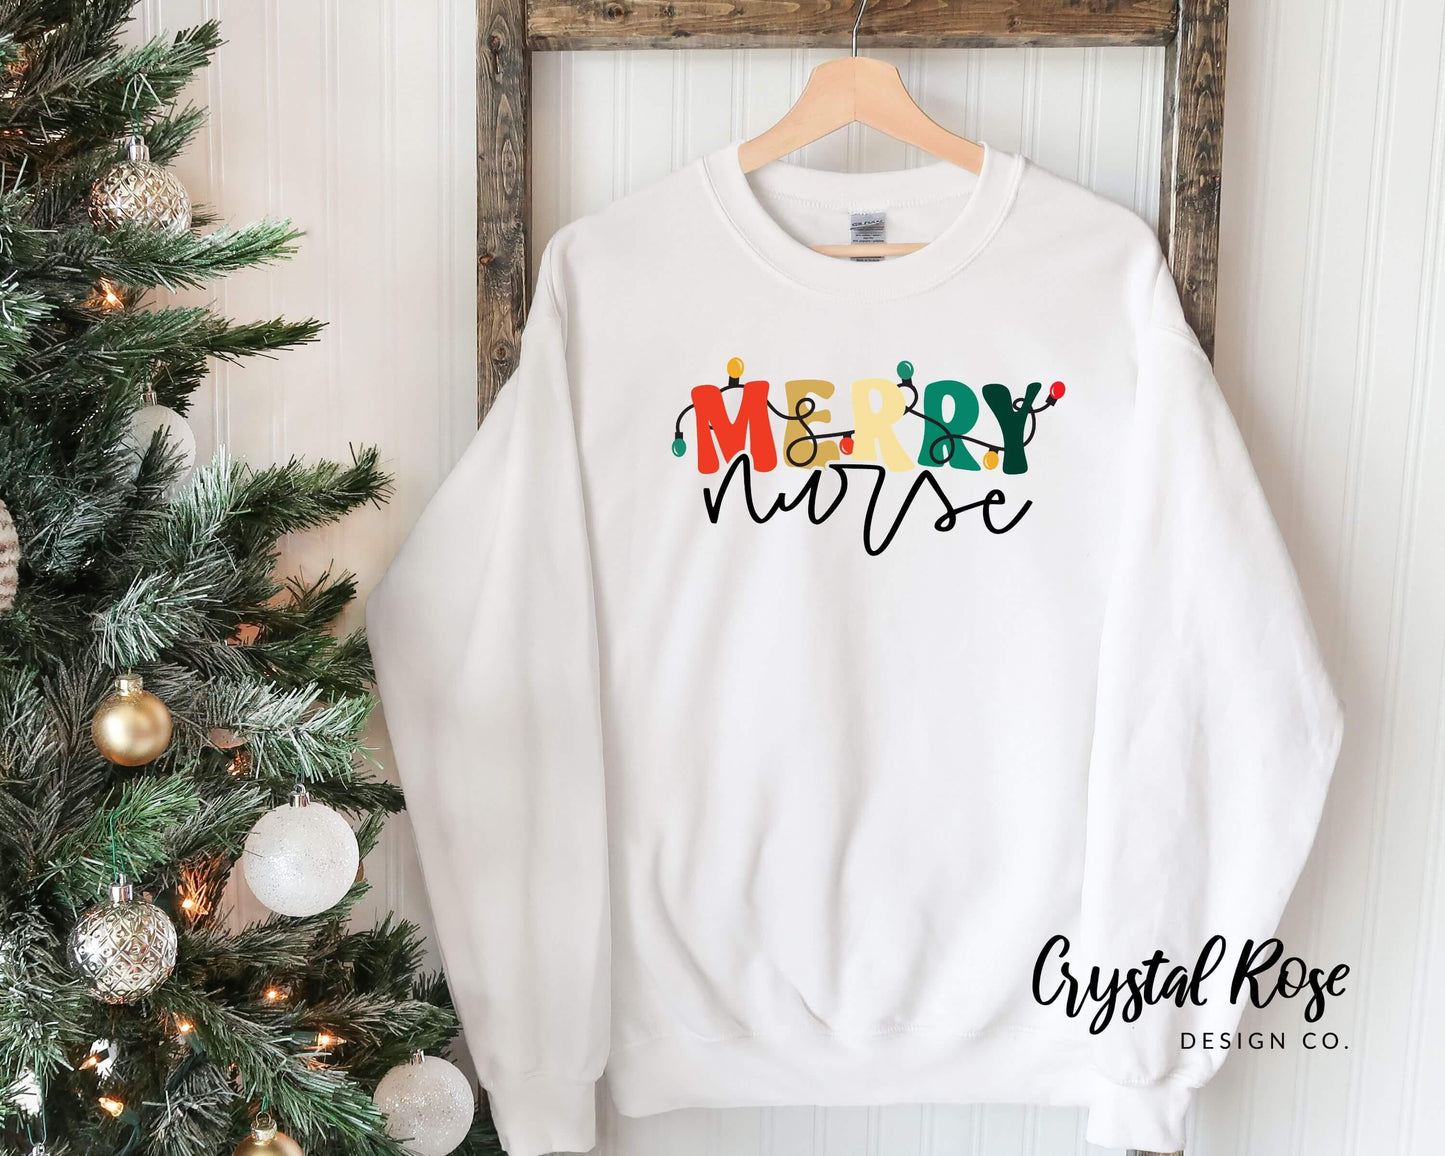 Merry Nurse Christmas Crewneck Sweater - Crystal Rose Design Co.